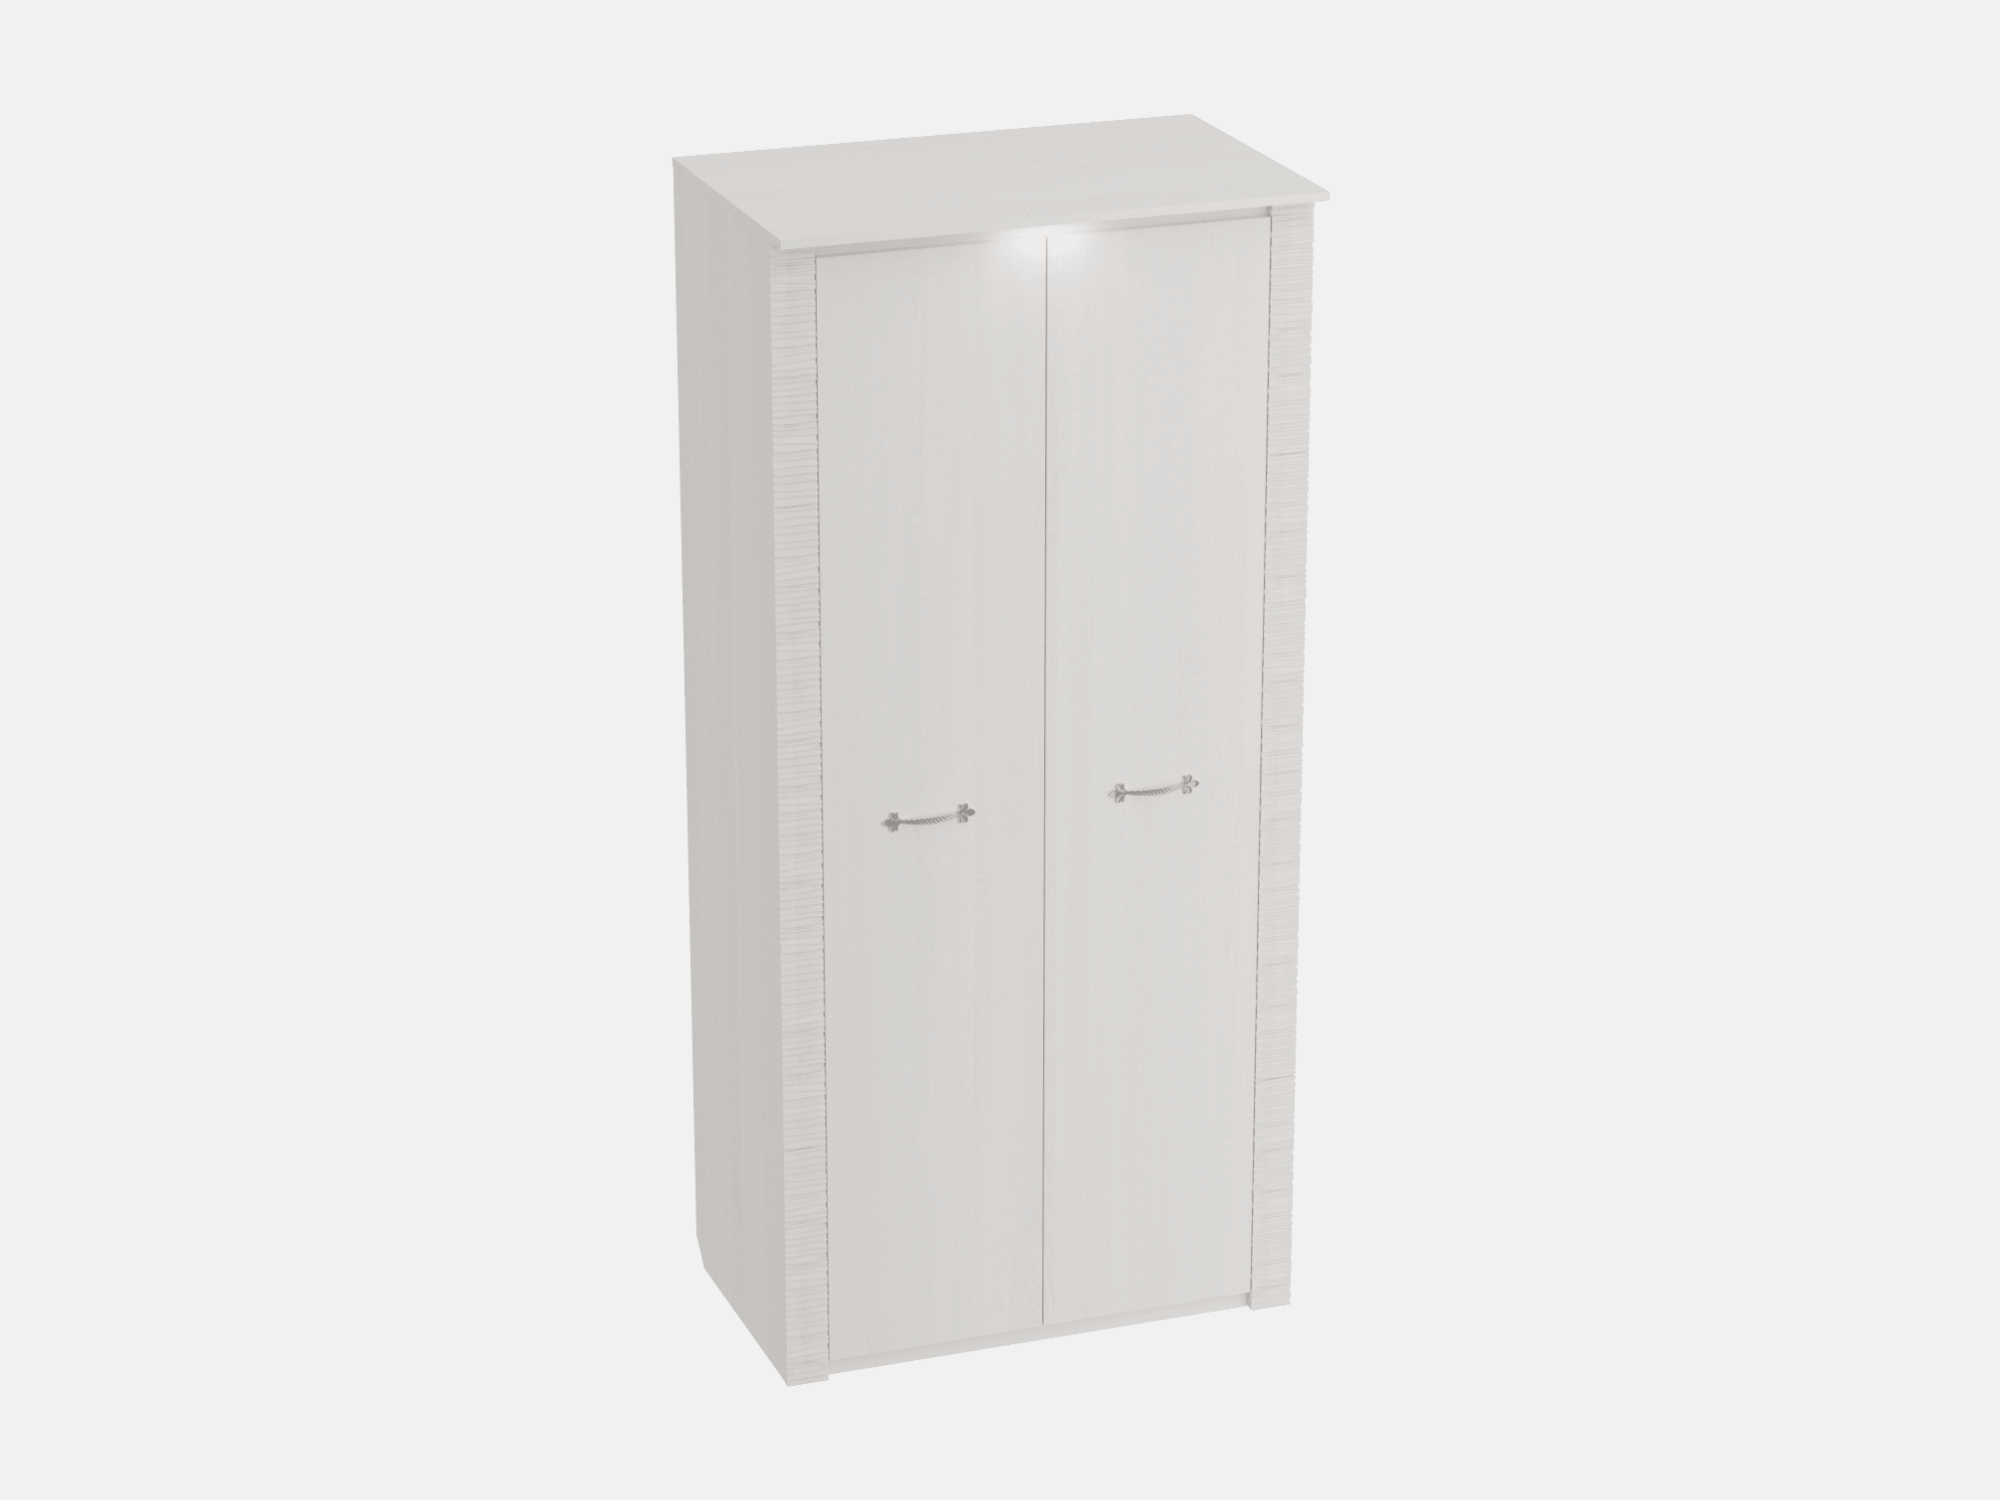 Элана спальня Шкаф 2-дверный, бодега (Бодега белая) Белый, МДФ, ЛДСП элана тумба прикроватная бодега бодега белая белый мдф лдсп